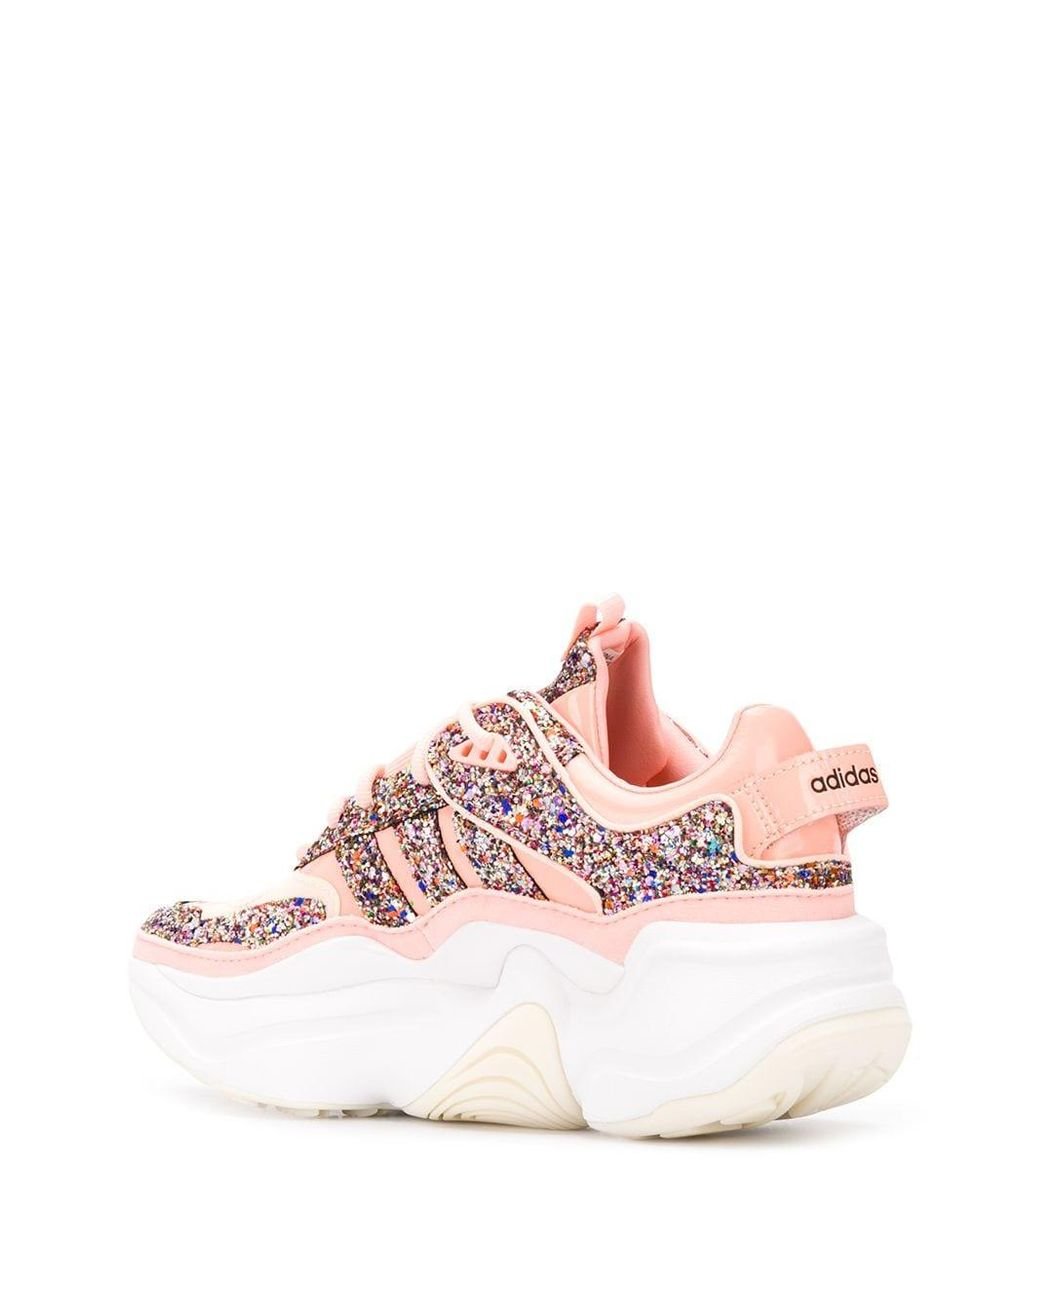 Adidas Grand Court Girls White And Pink Glitter Sneaker Women's Size US 2 |  eBay